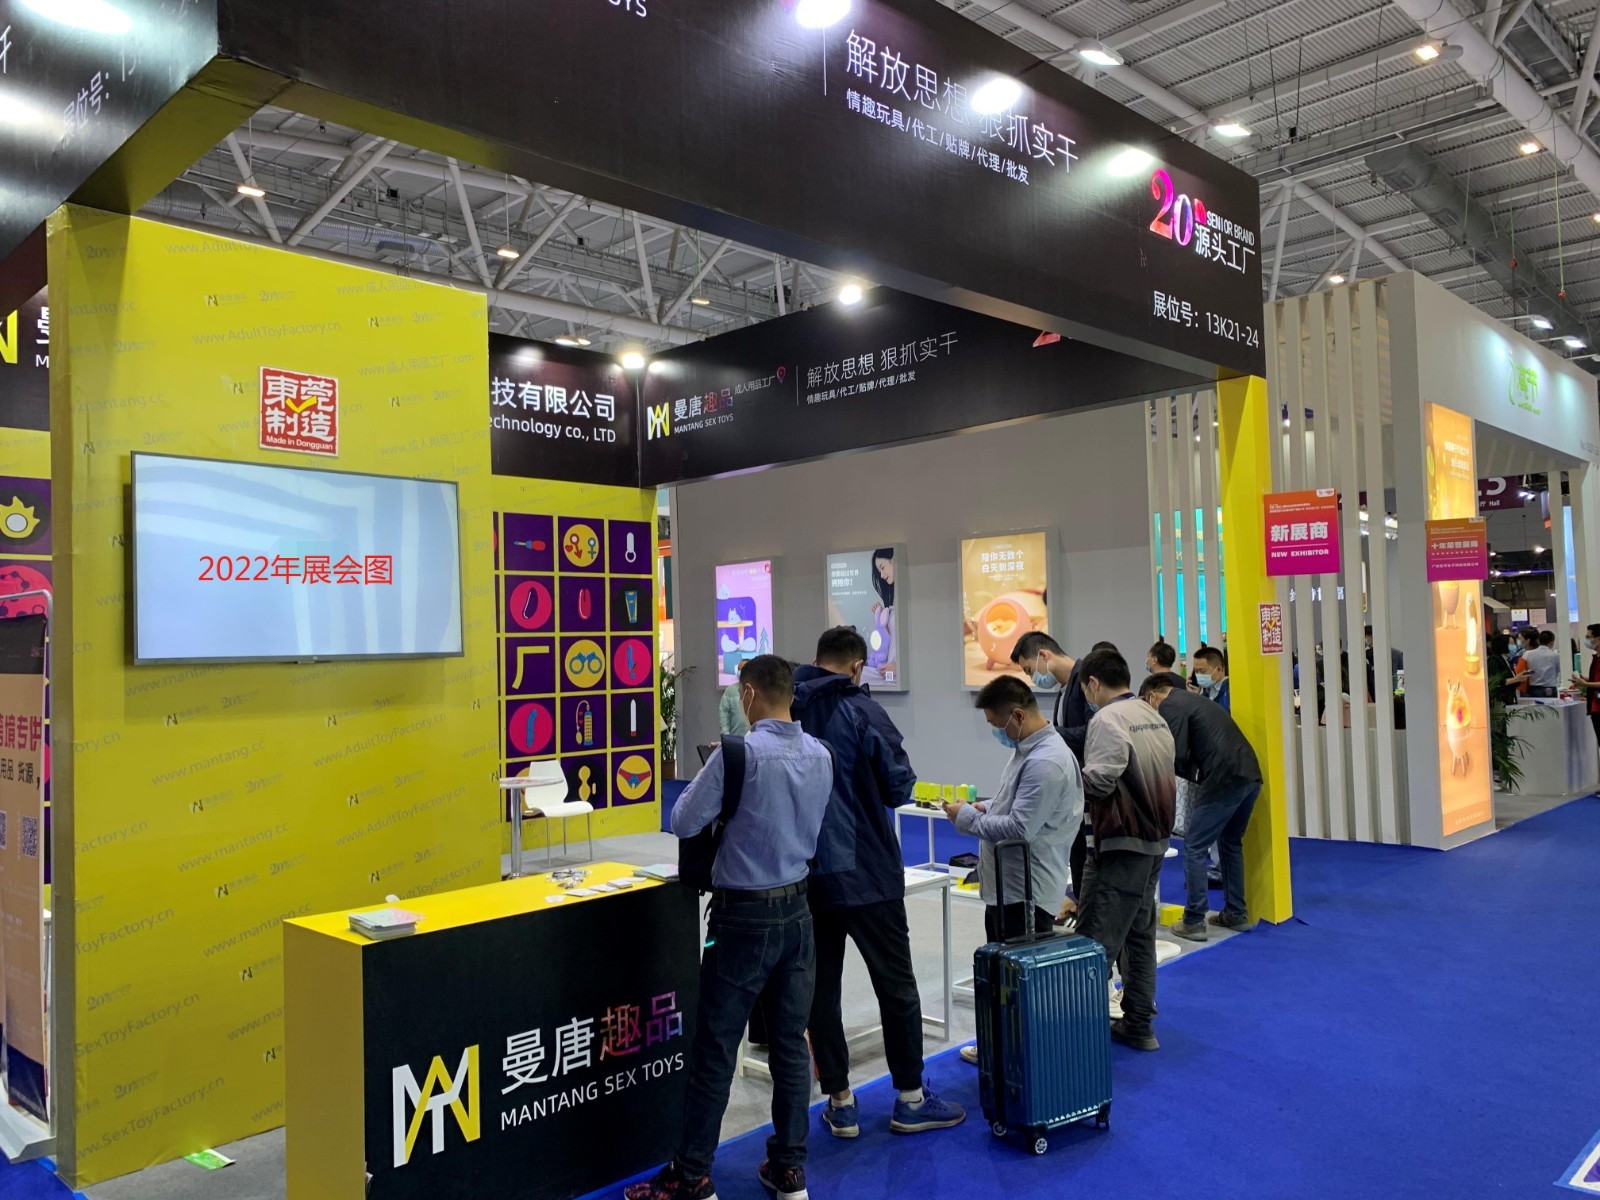 2022 Mantang Interests Cross-border E-Commerce Exhibition